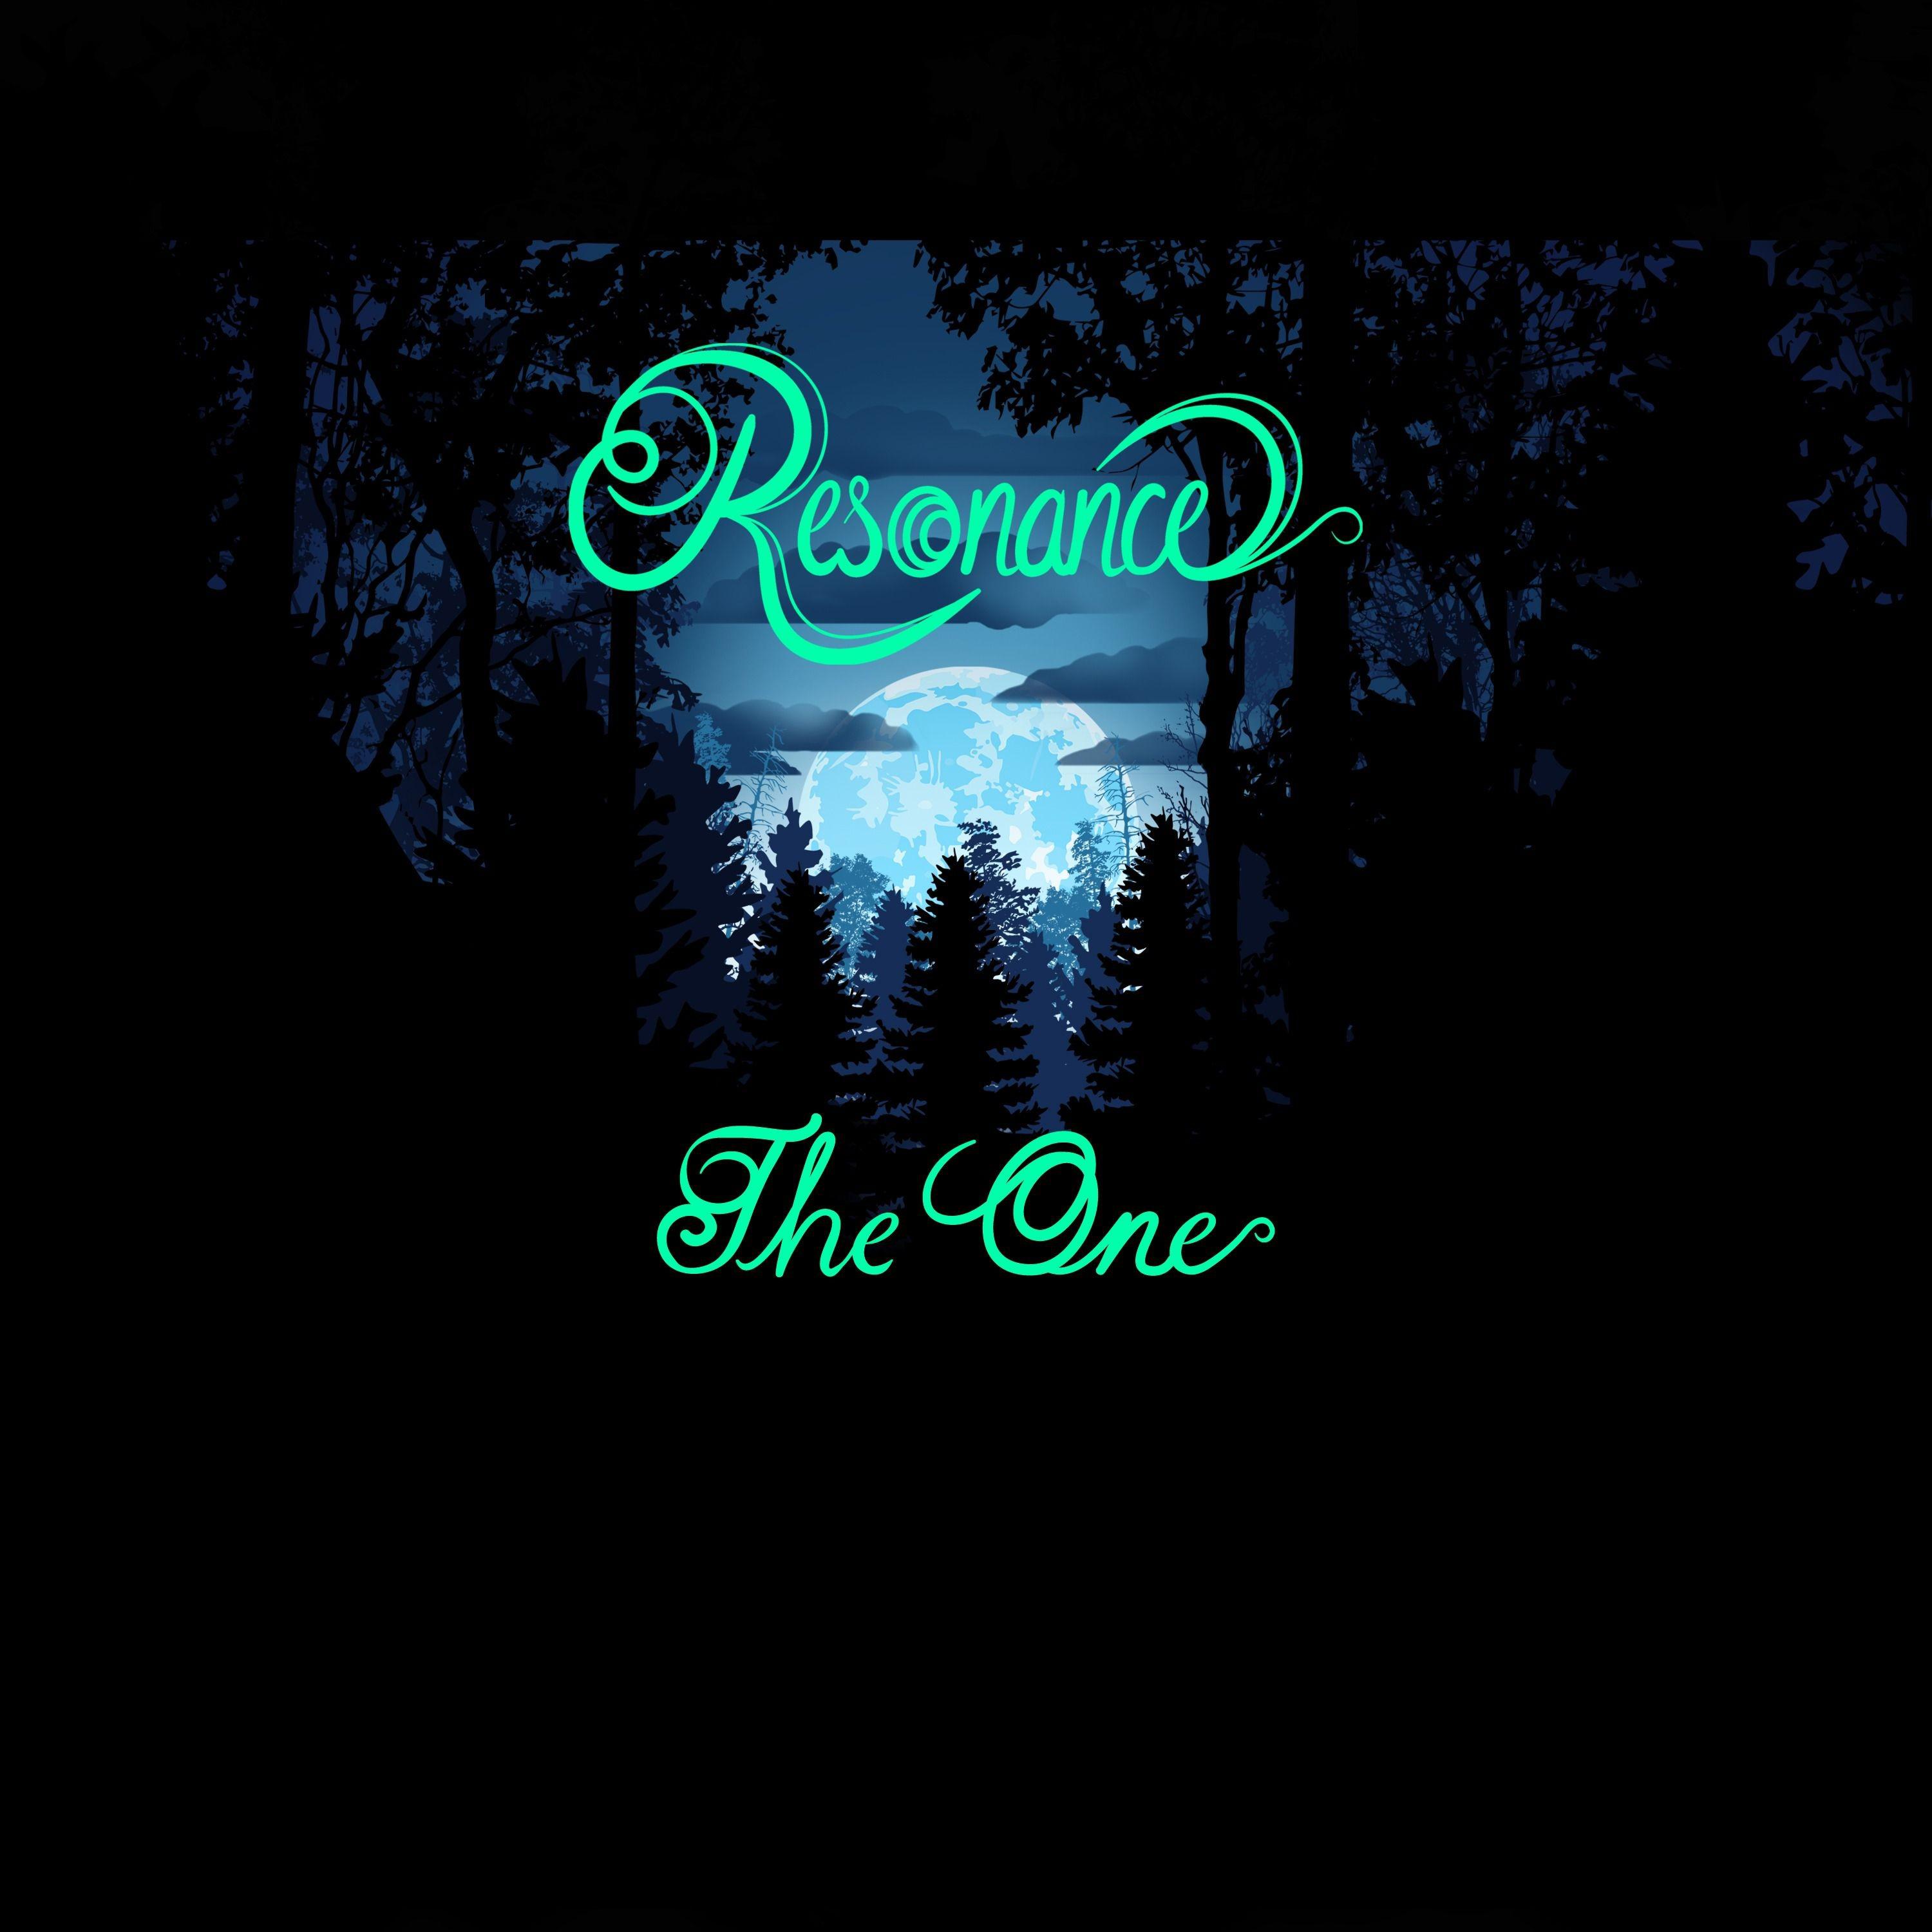 Resonance - The One